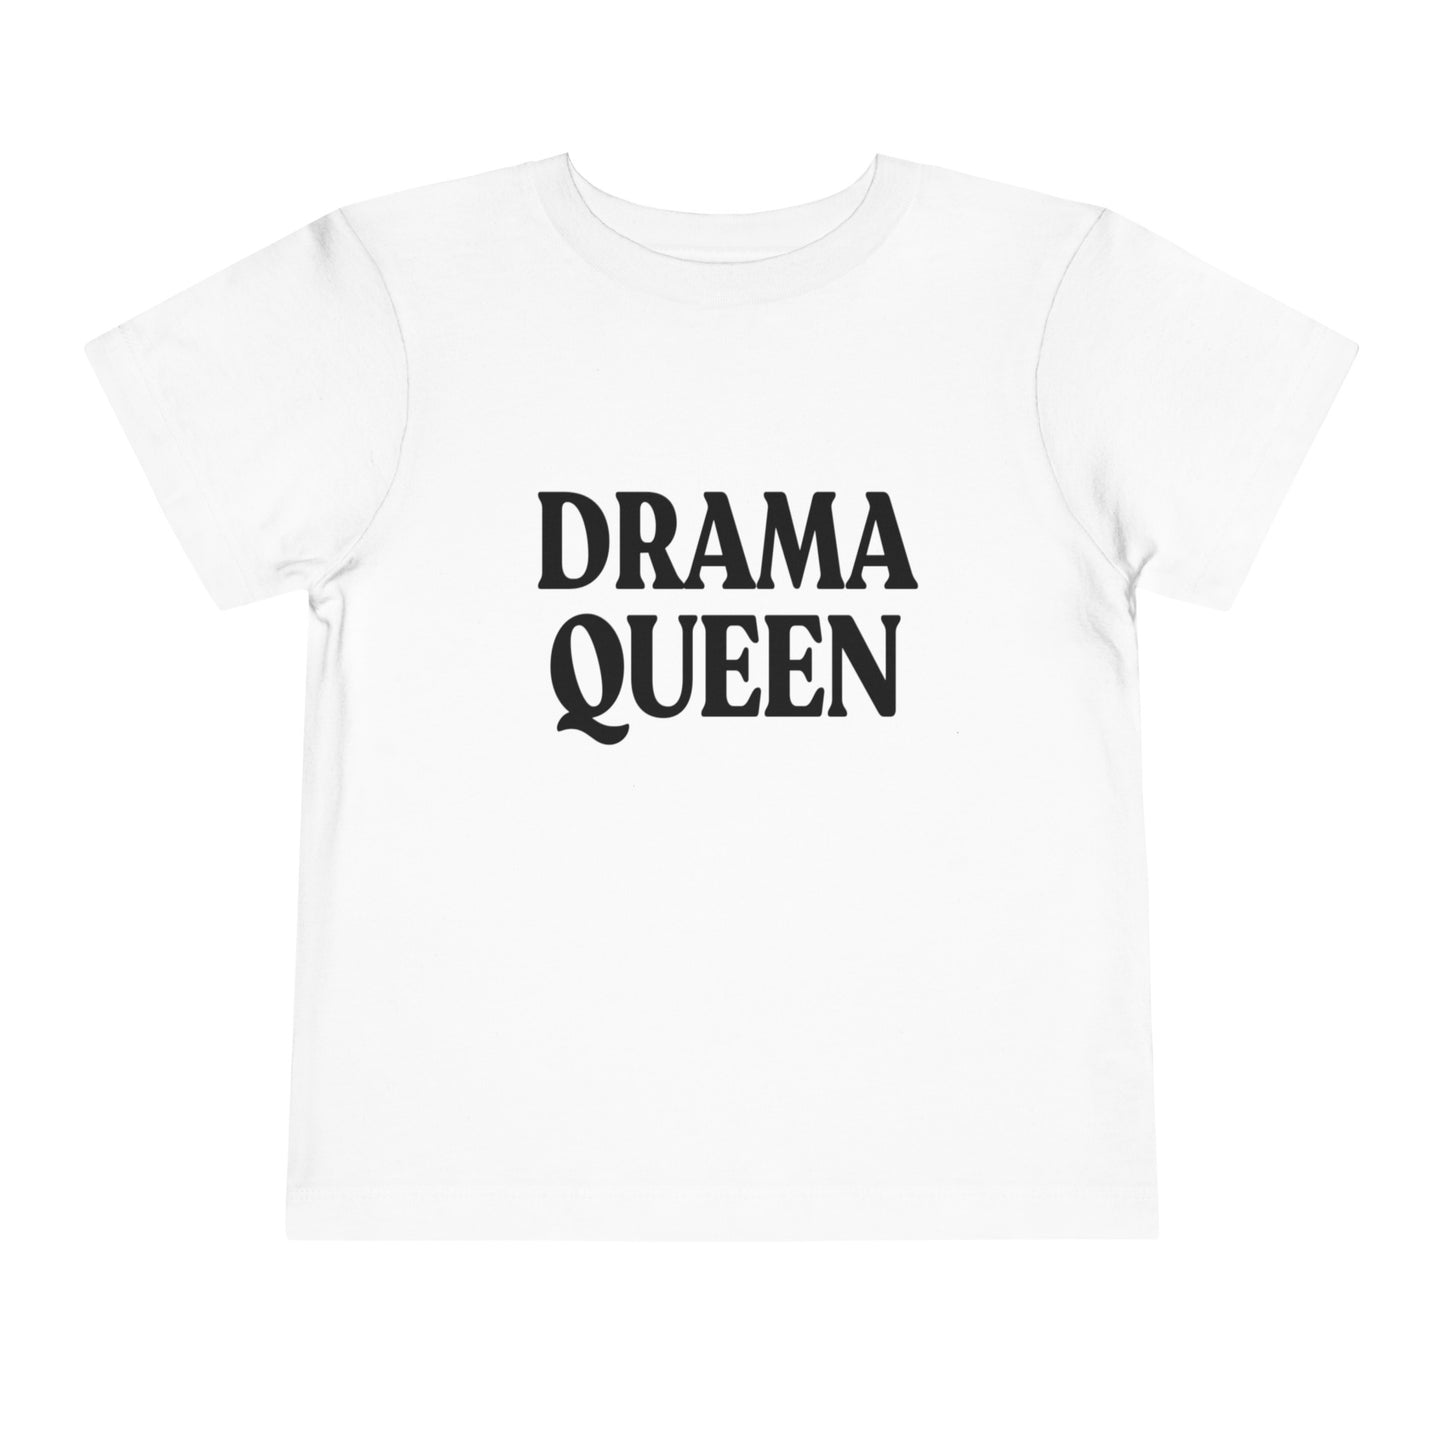 Drama Queen Toddler Tee